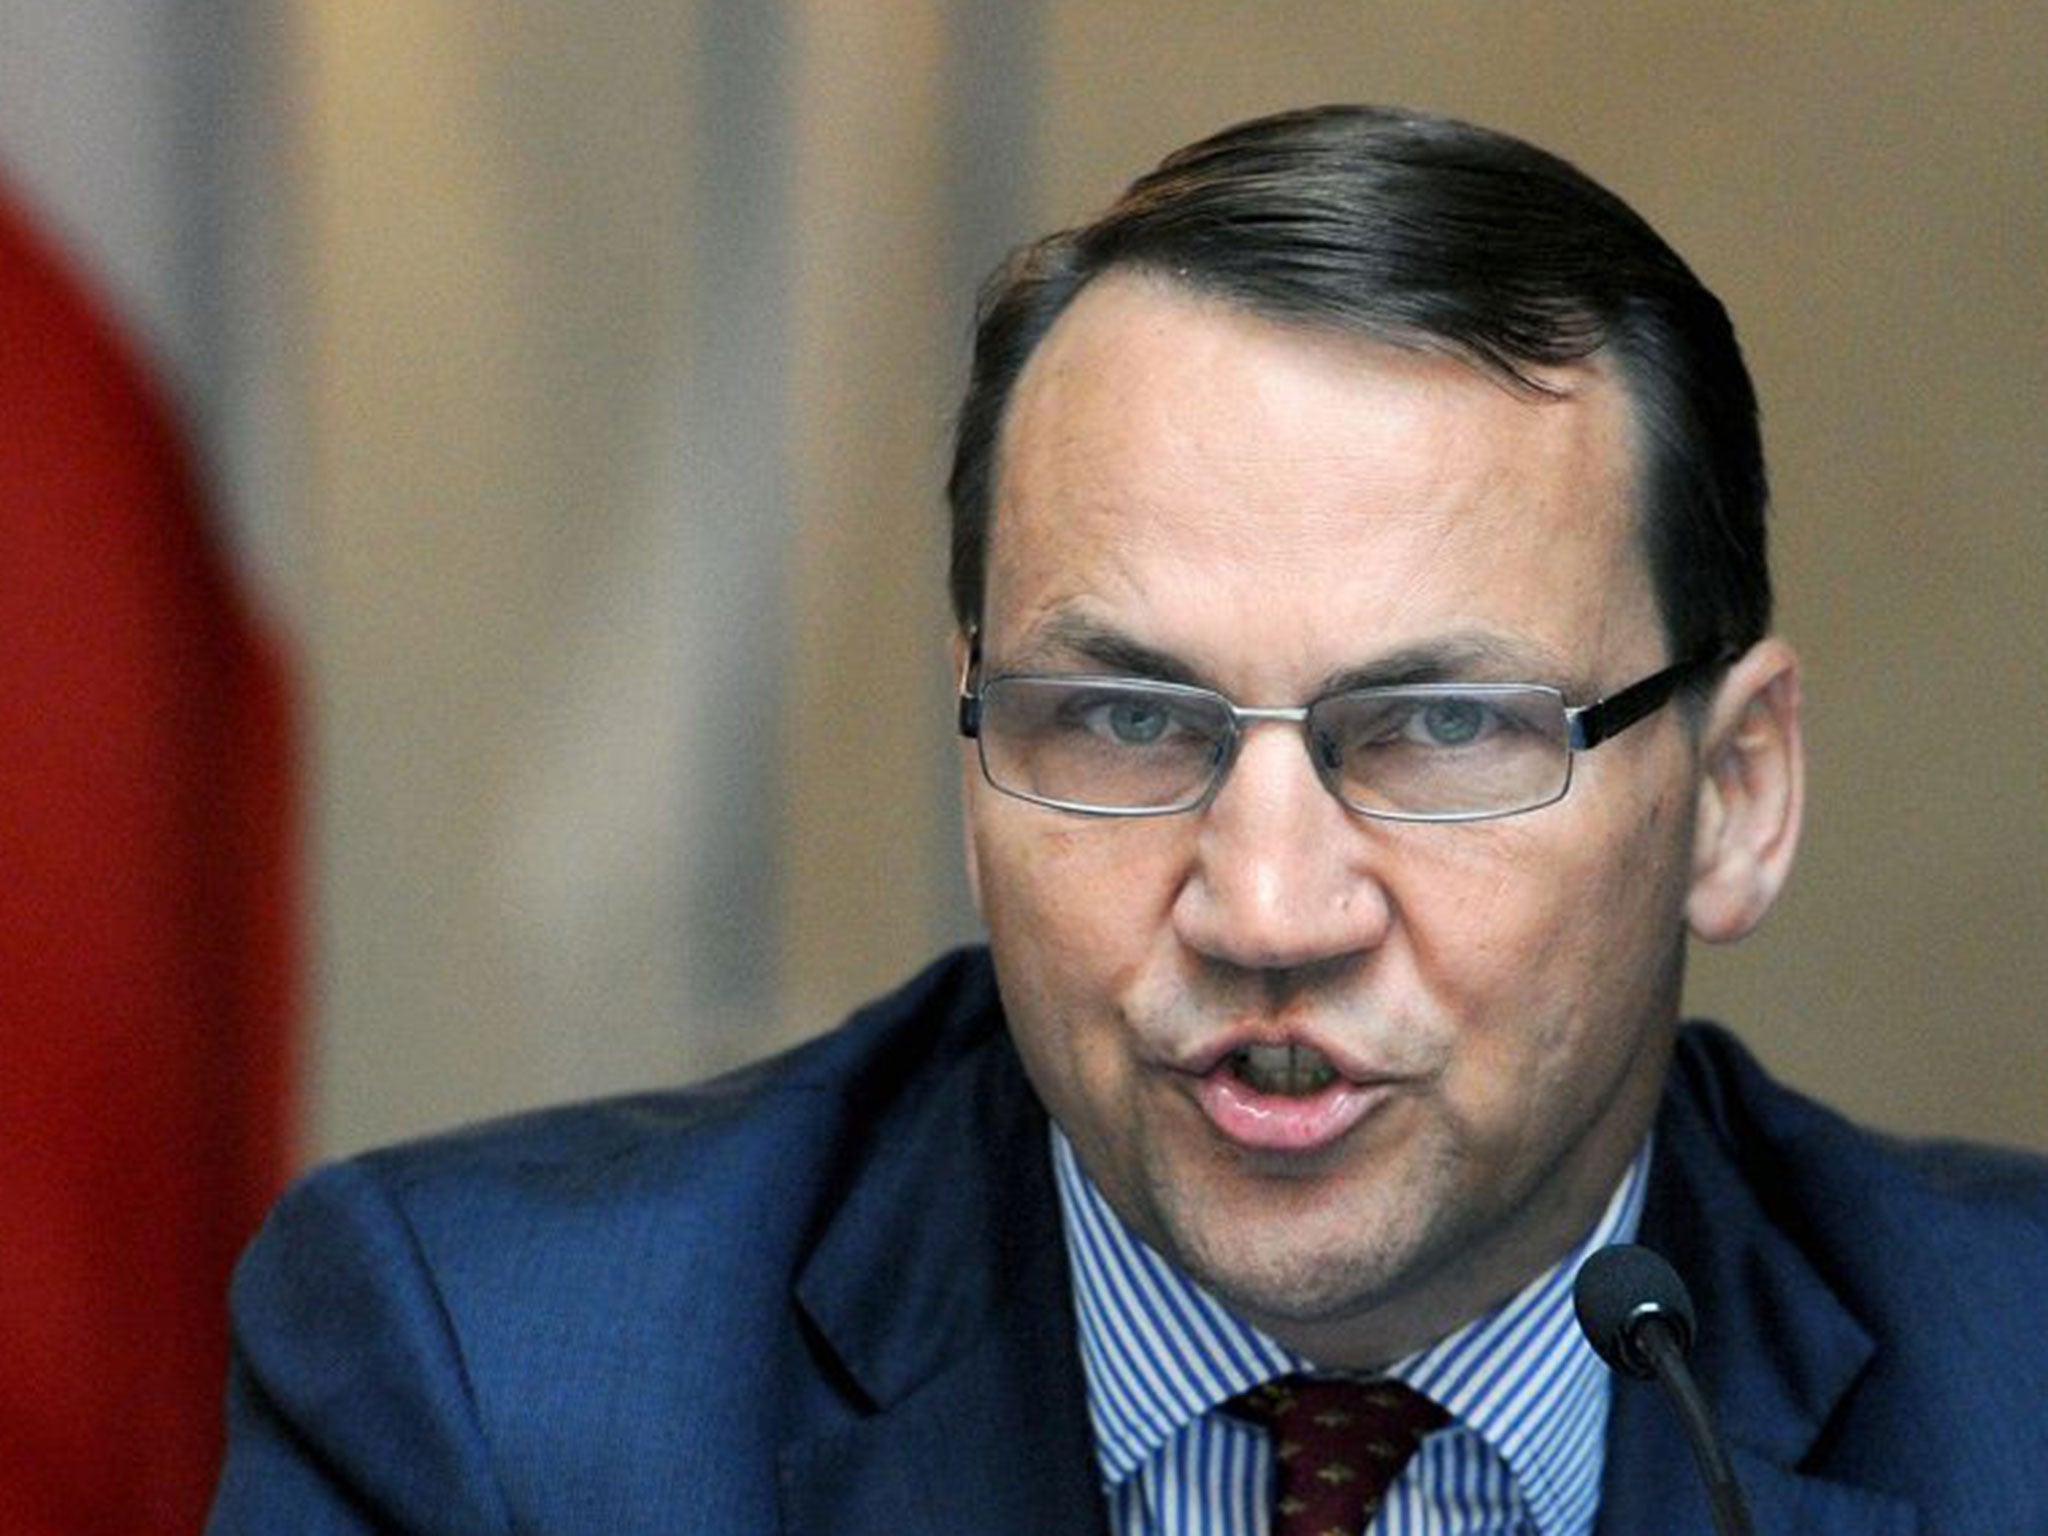 Radoslaw Sikorski is the current Polish Foreign Minister